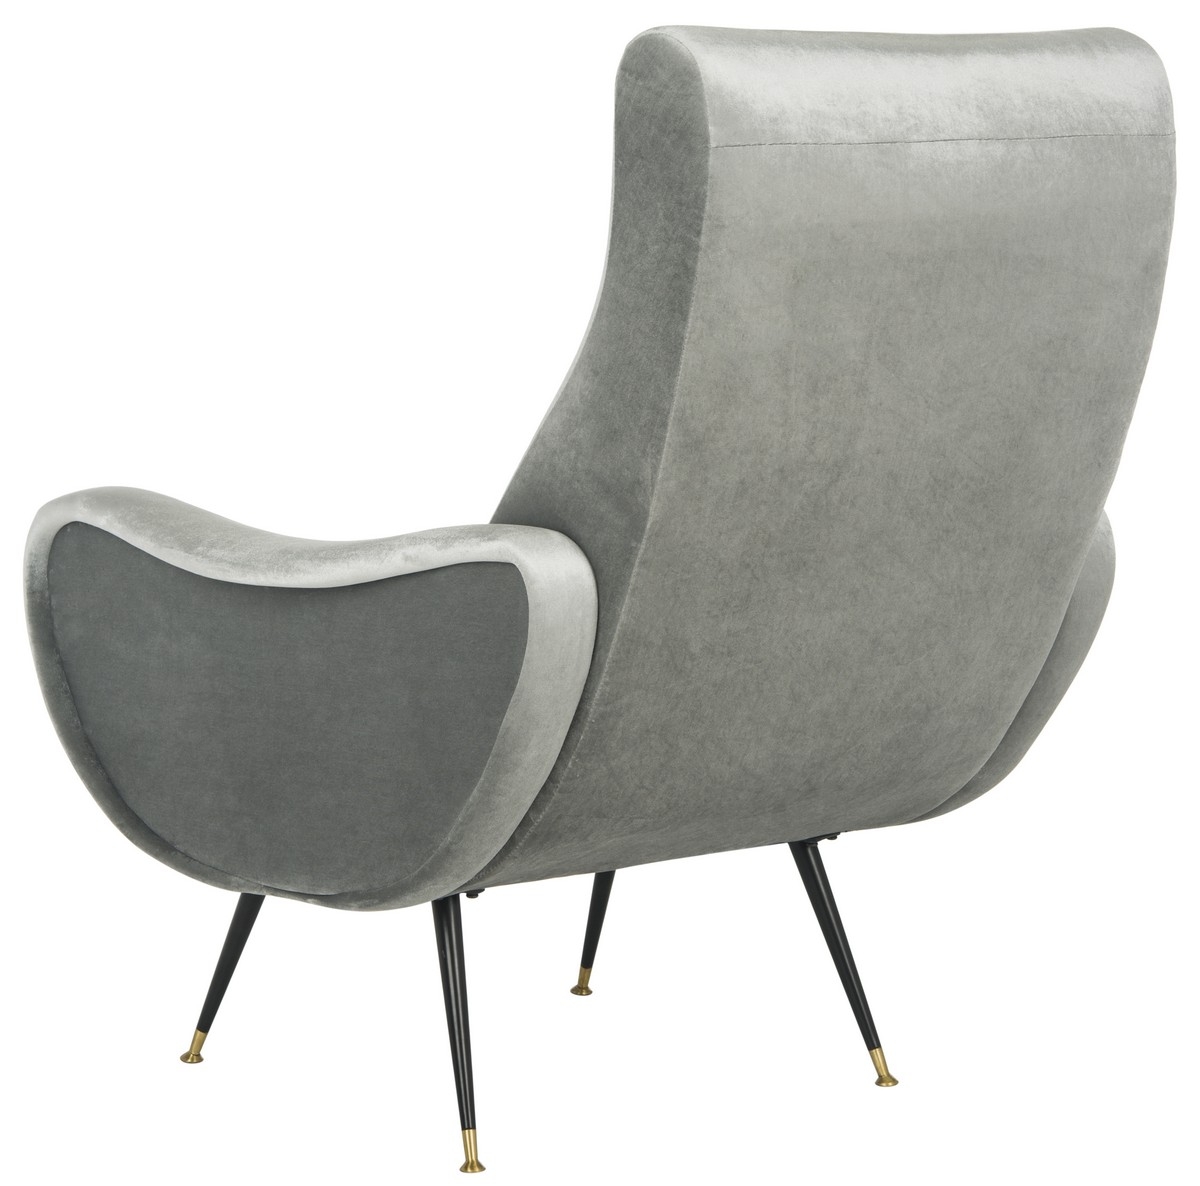 Elicia Velvet Retro Mid Centry Accent Chair - Light Grey - Arlo Home - Image 2